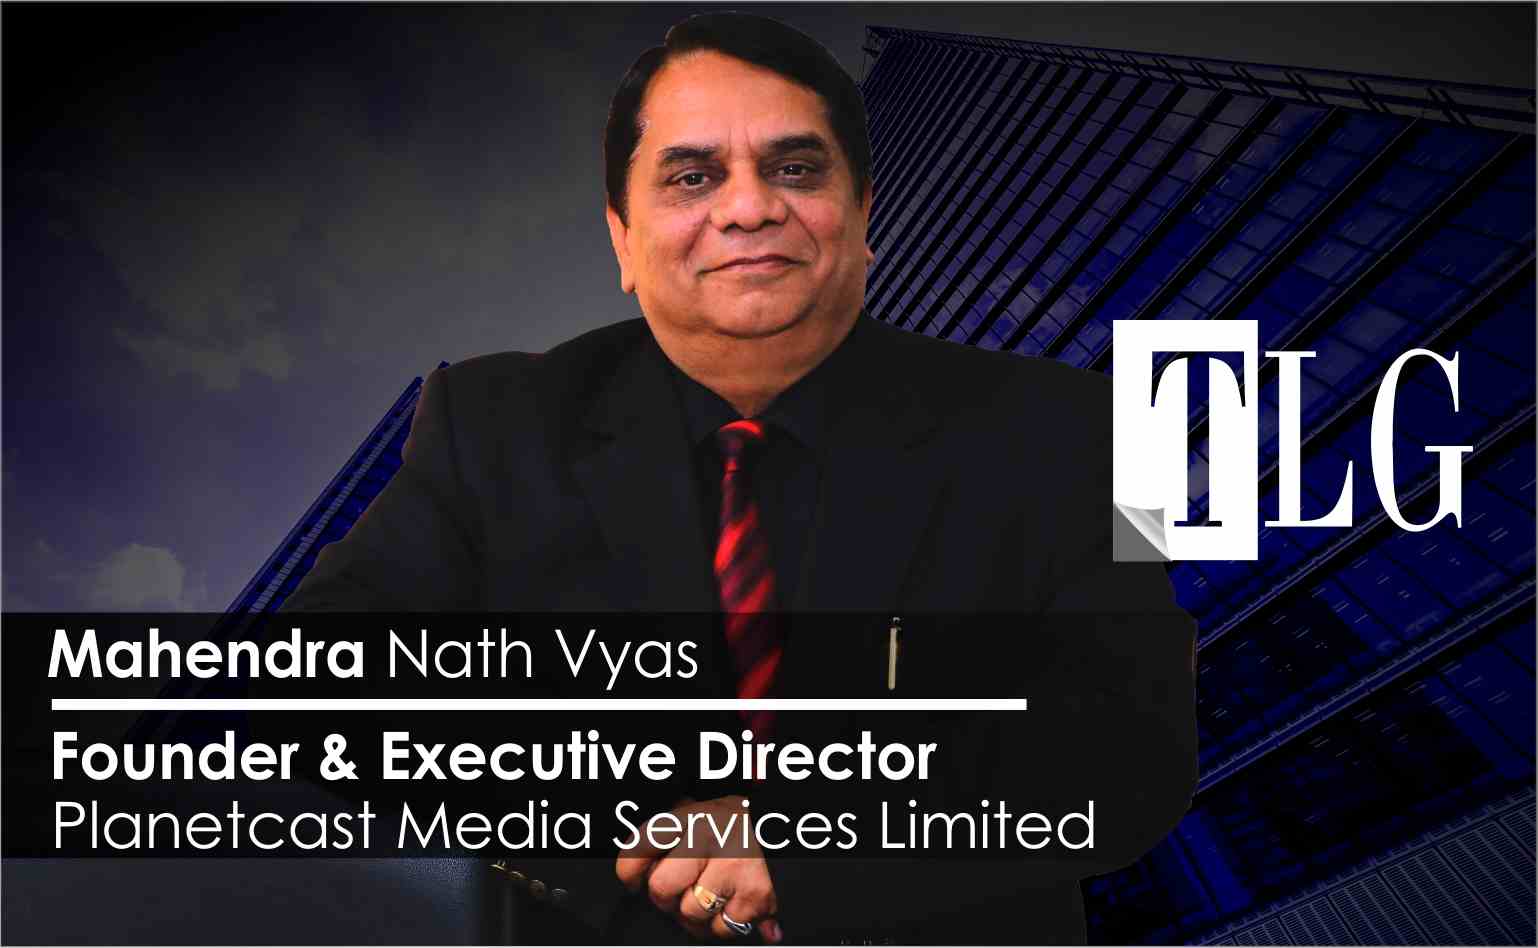 Mahendra Nath Vyas Planetcast Media Services Limited Entrepreneur